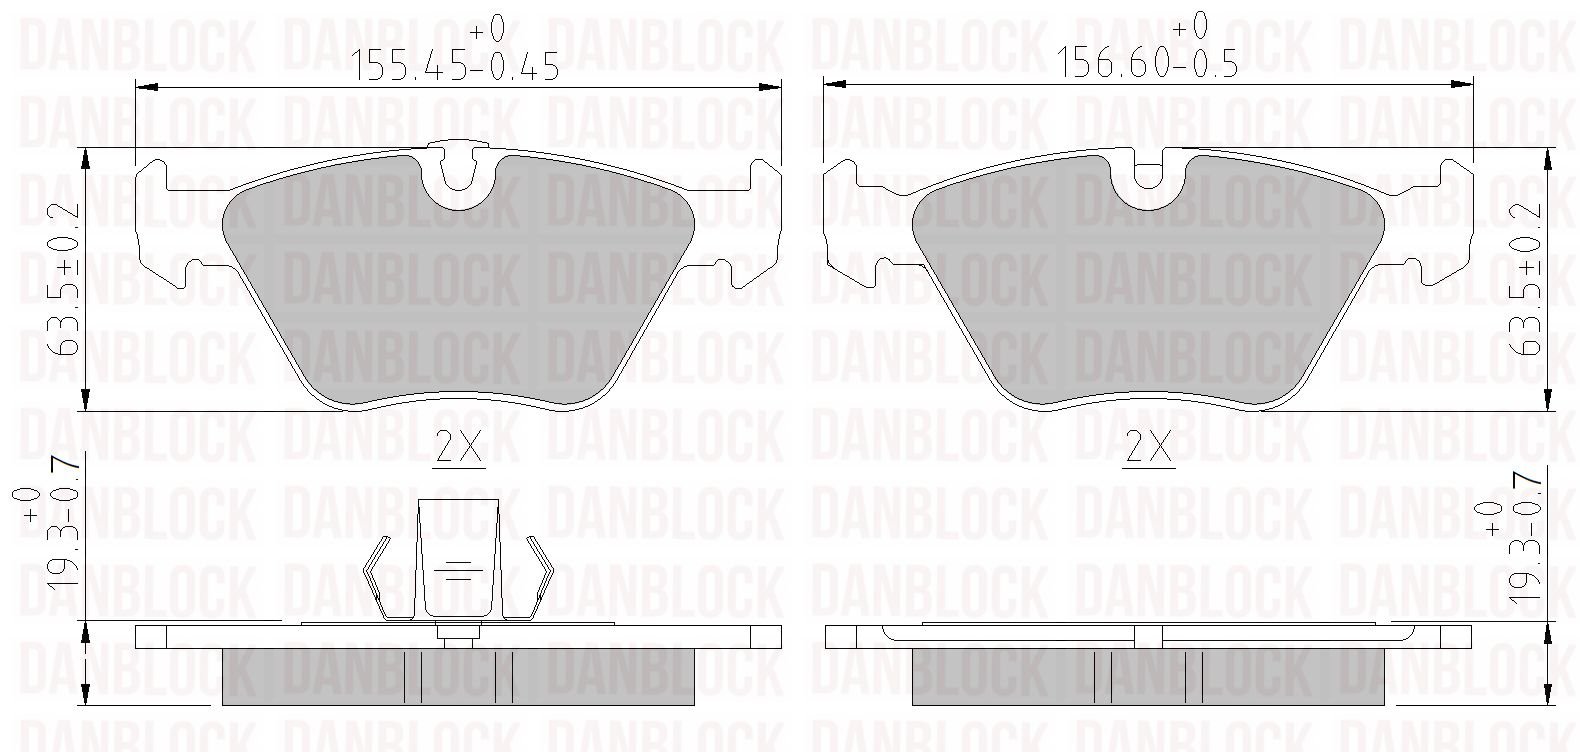 DANBLOCK DB 510289